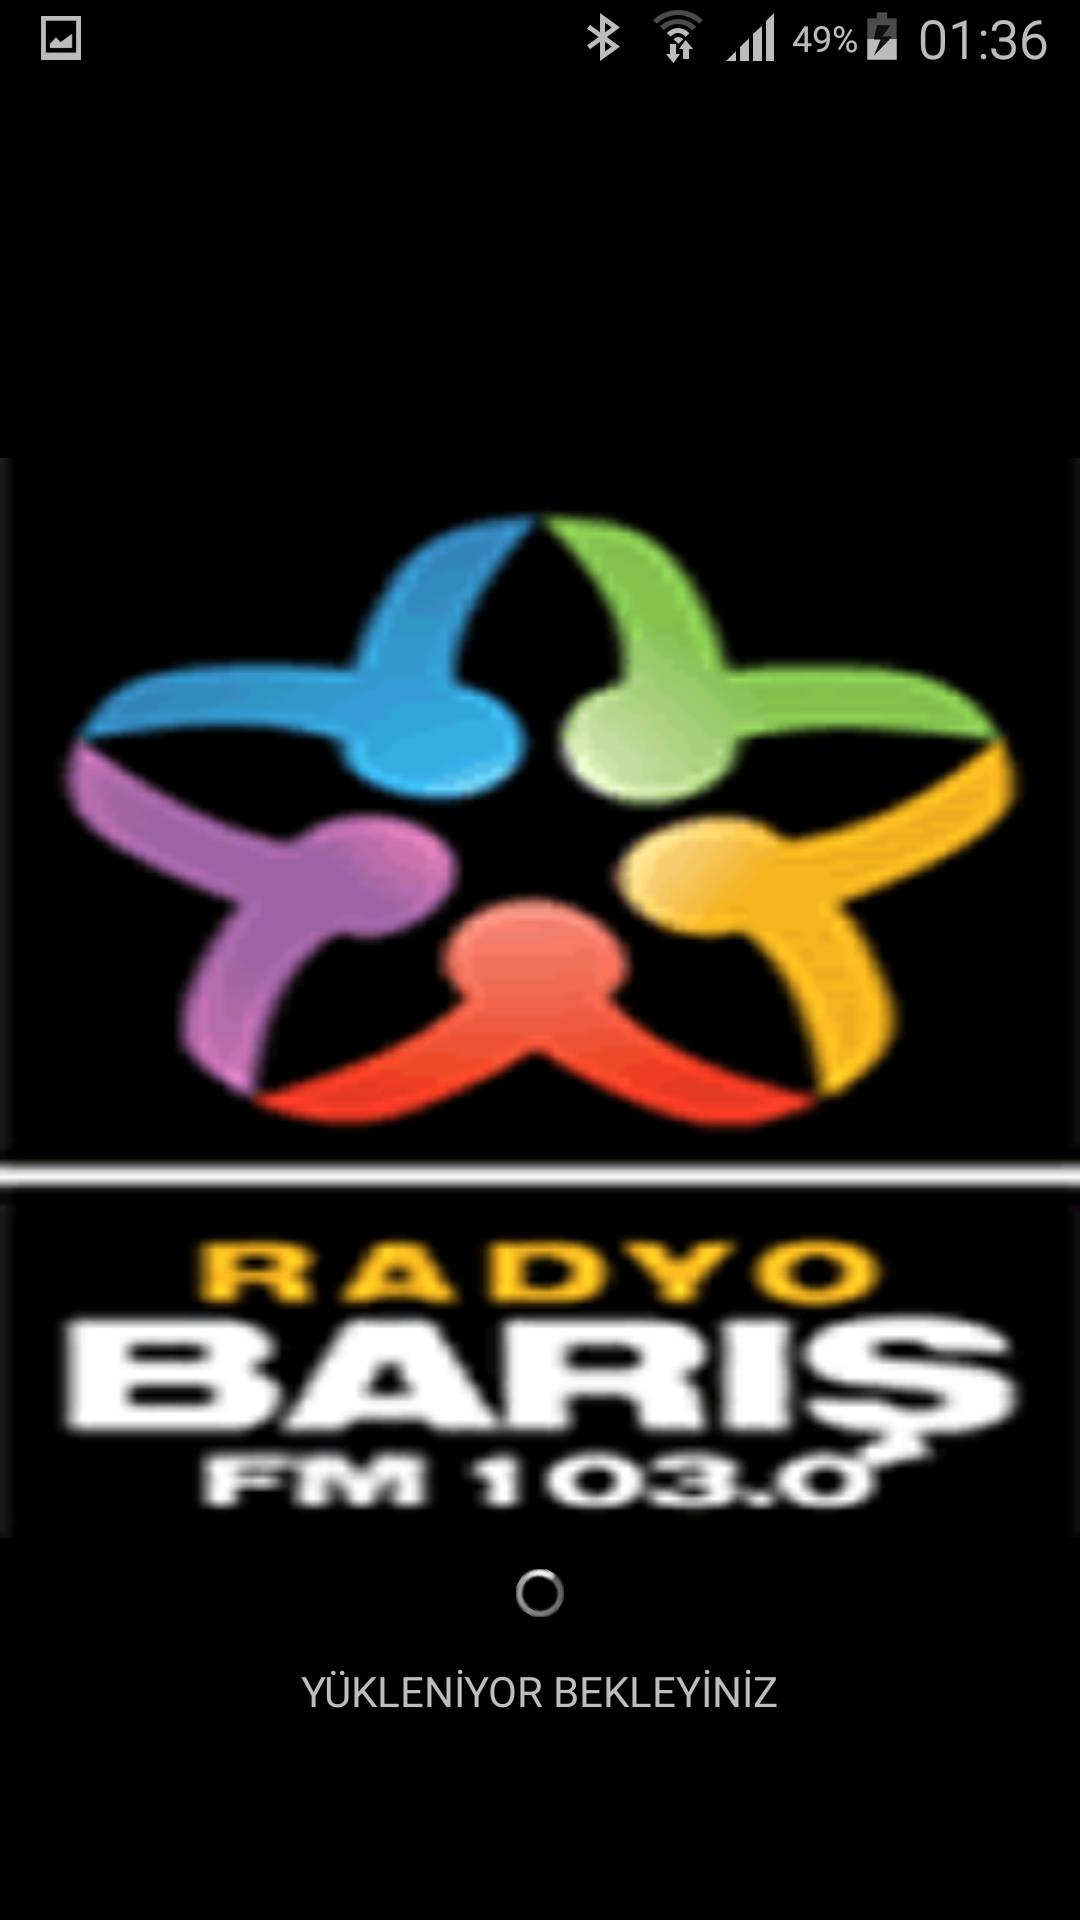 DERSİM RADYO BARIŞ for Android - APK Download